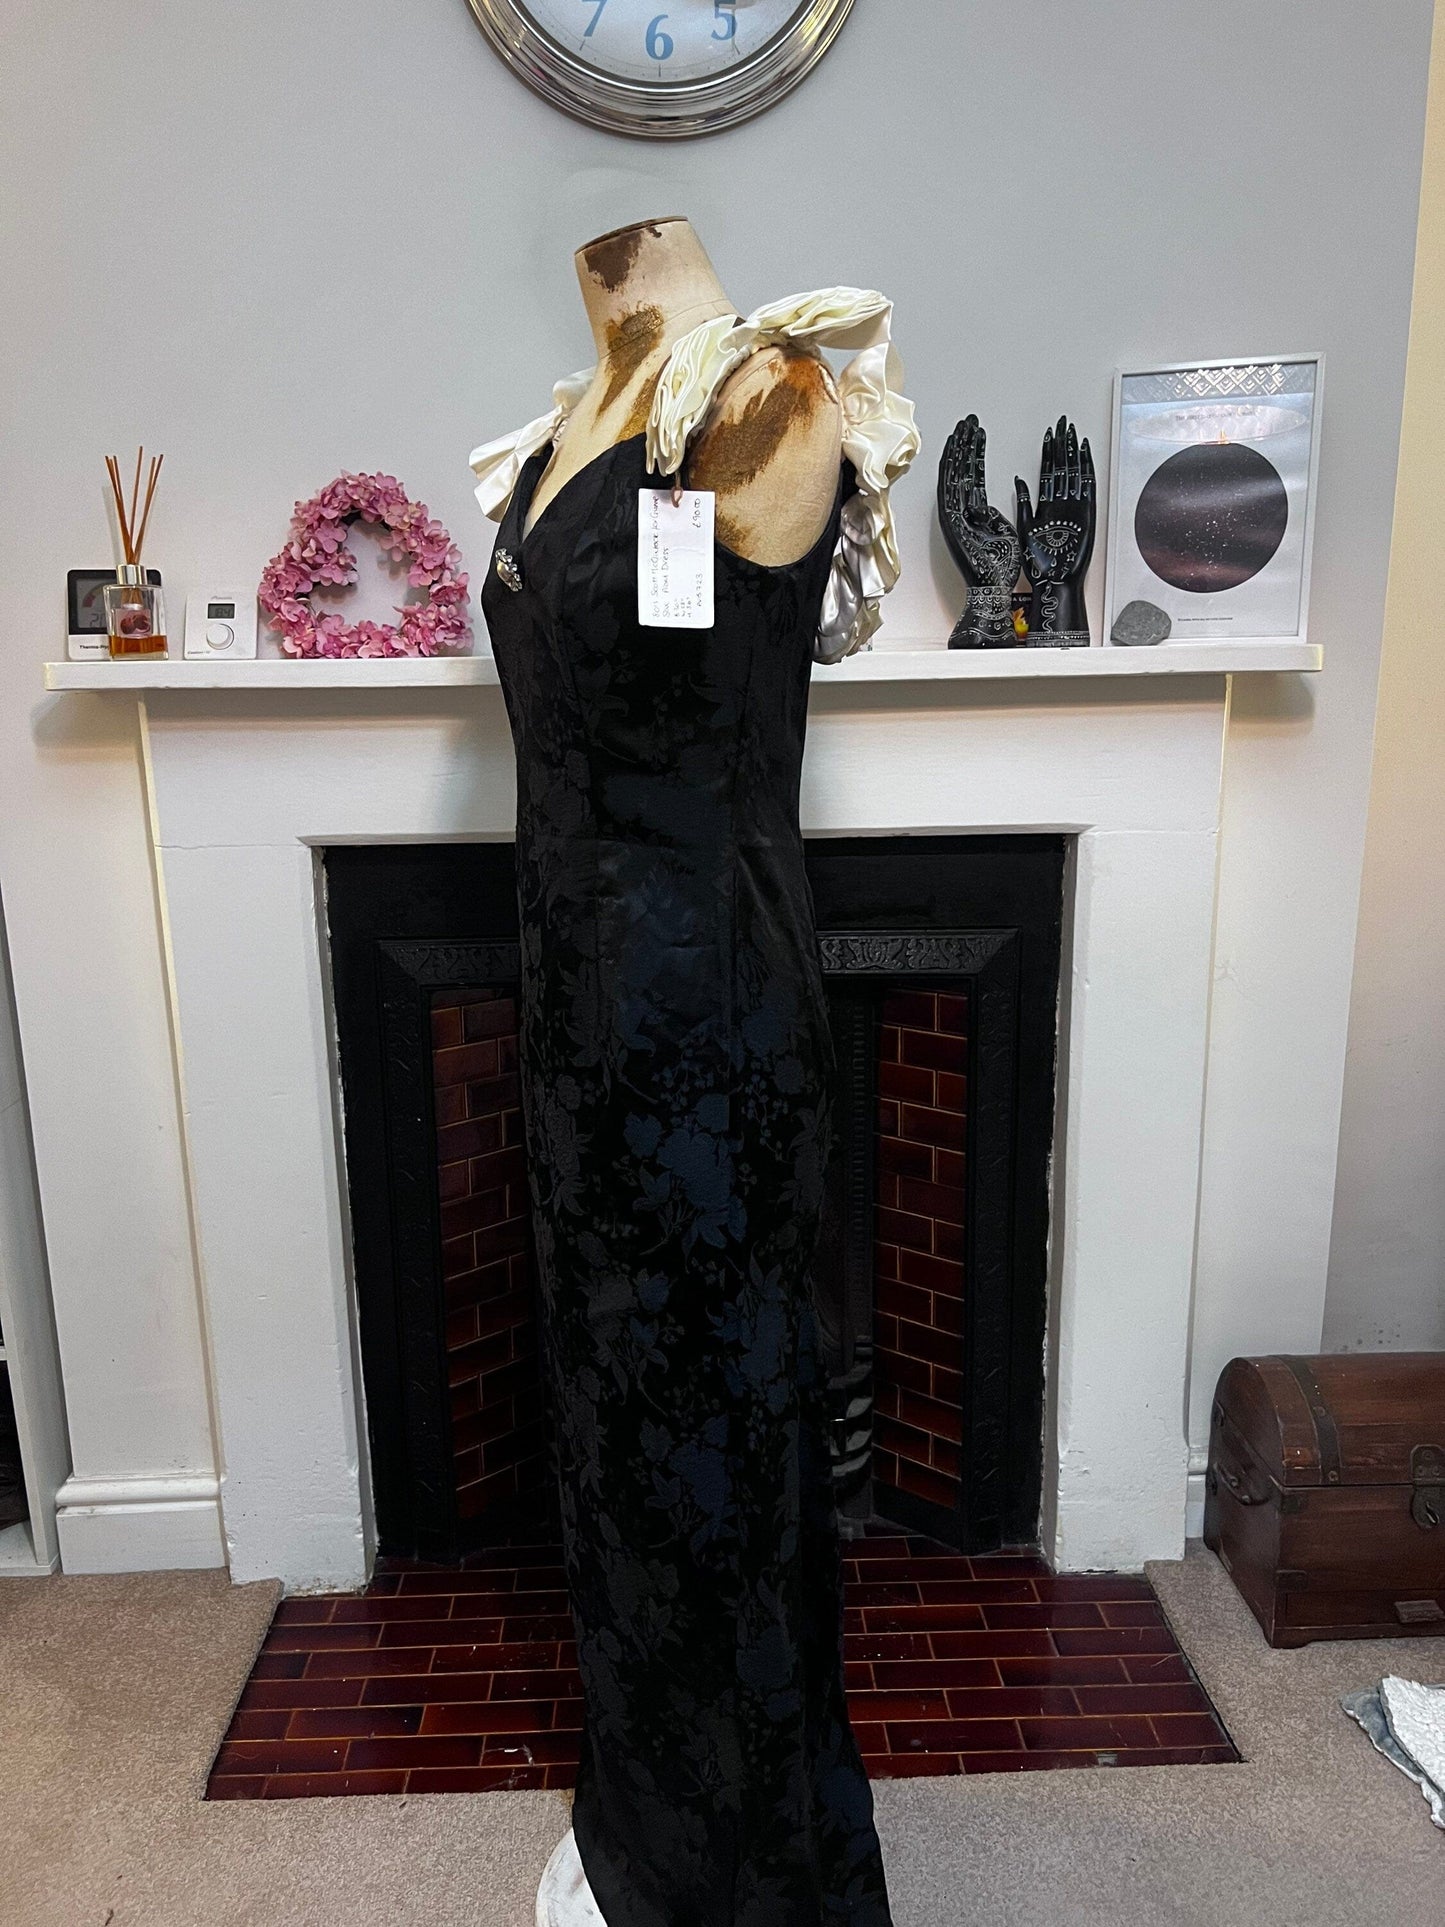 Vintage dress Black & Cream Scott McClintock 80s Prom Dress - Jessica McClintock for Gunne Sax